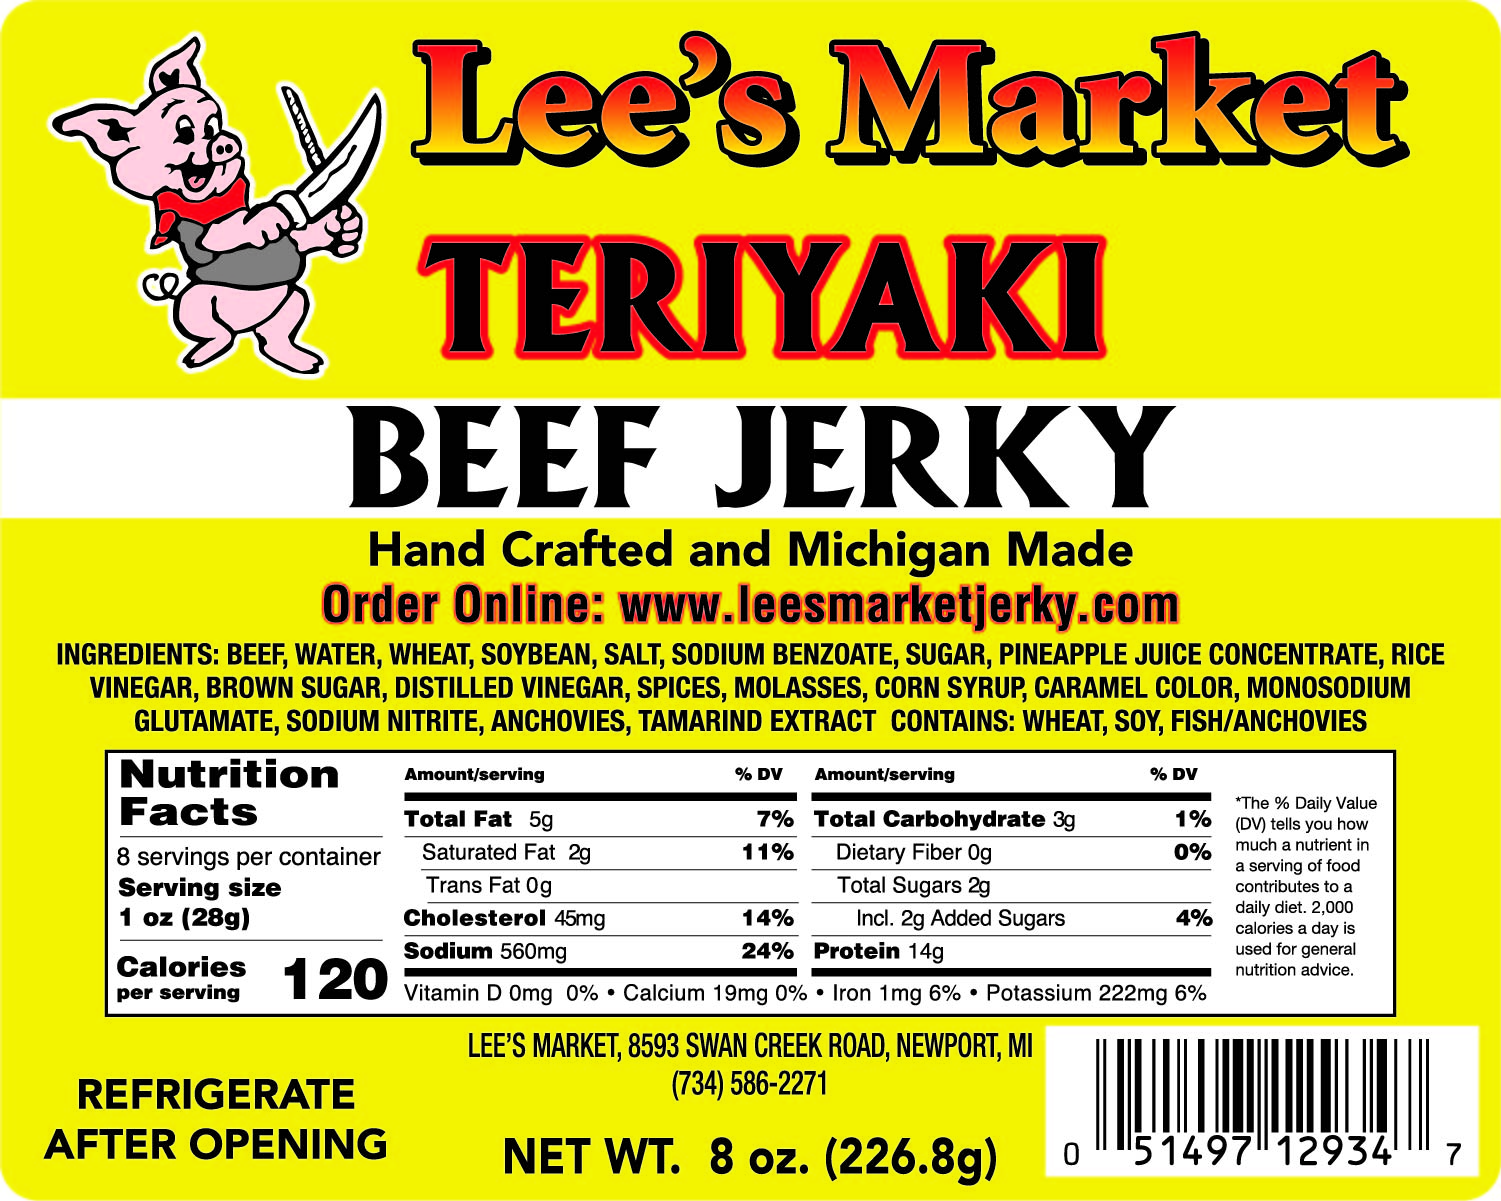 Teriyaki Beef Jerky - Fresh Off The Grid